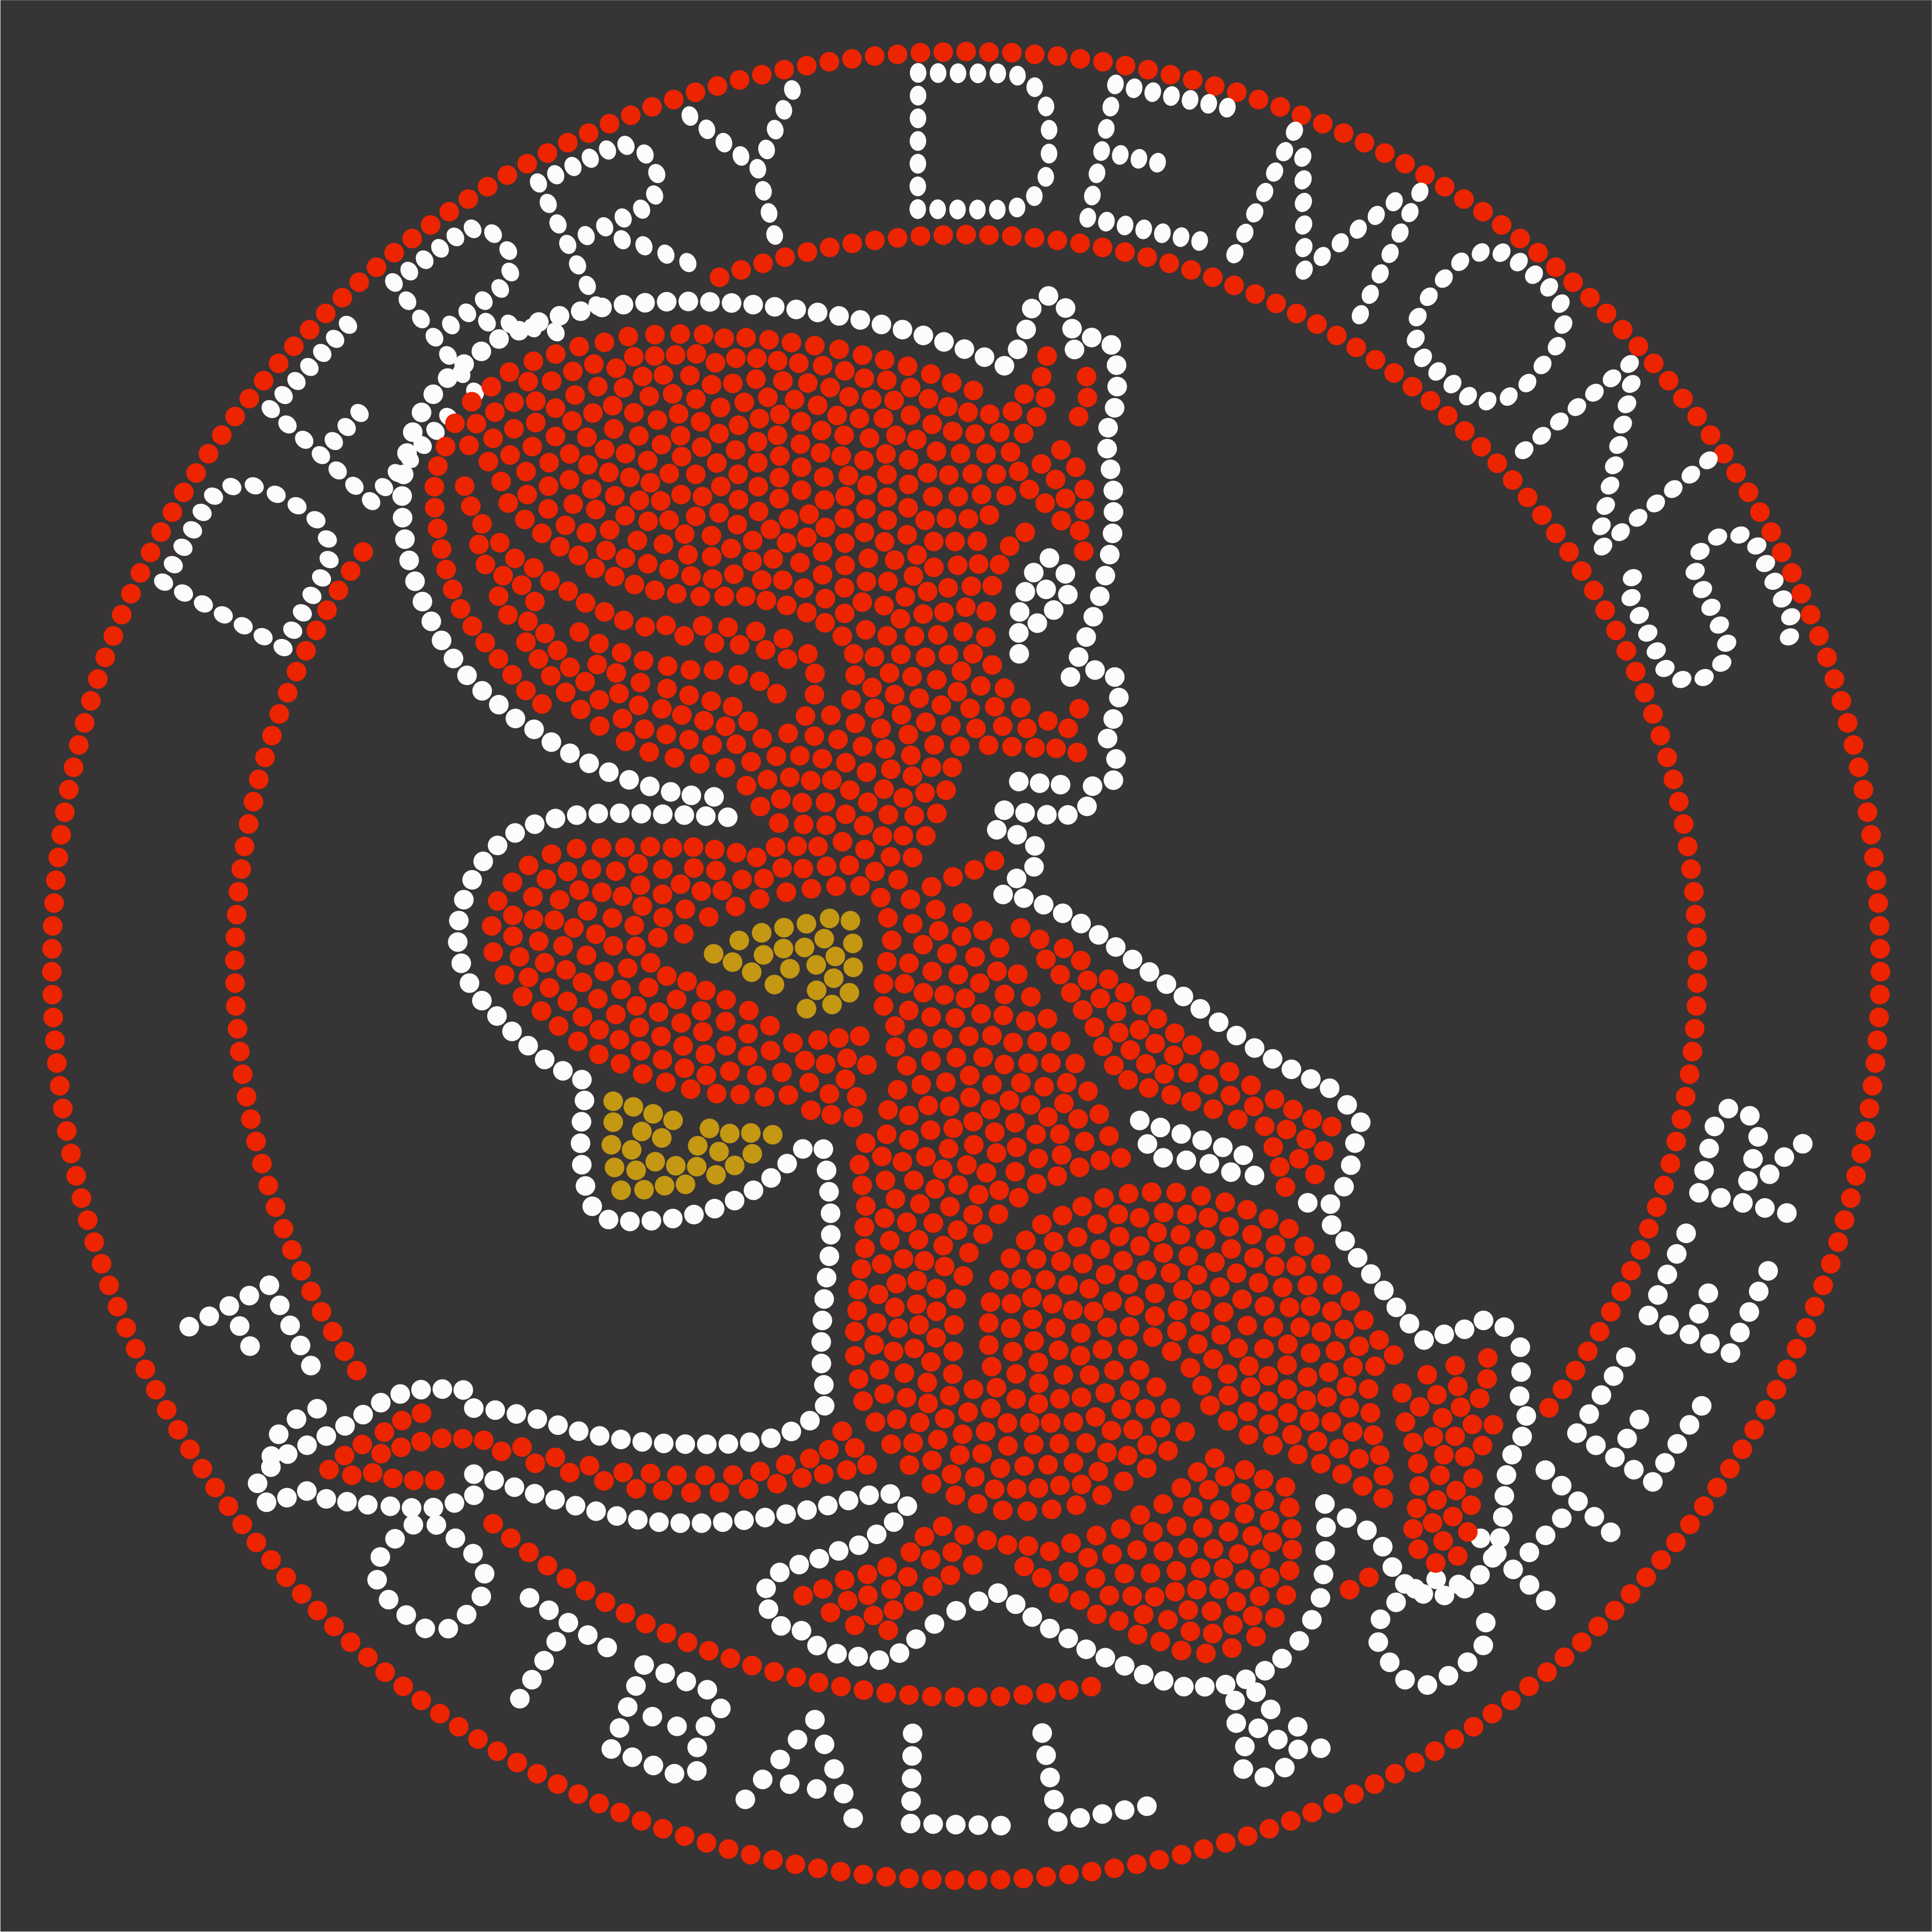 Derry Demons